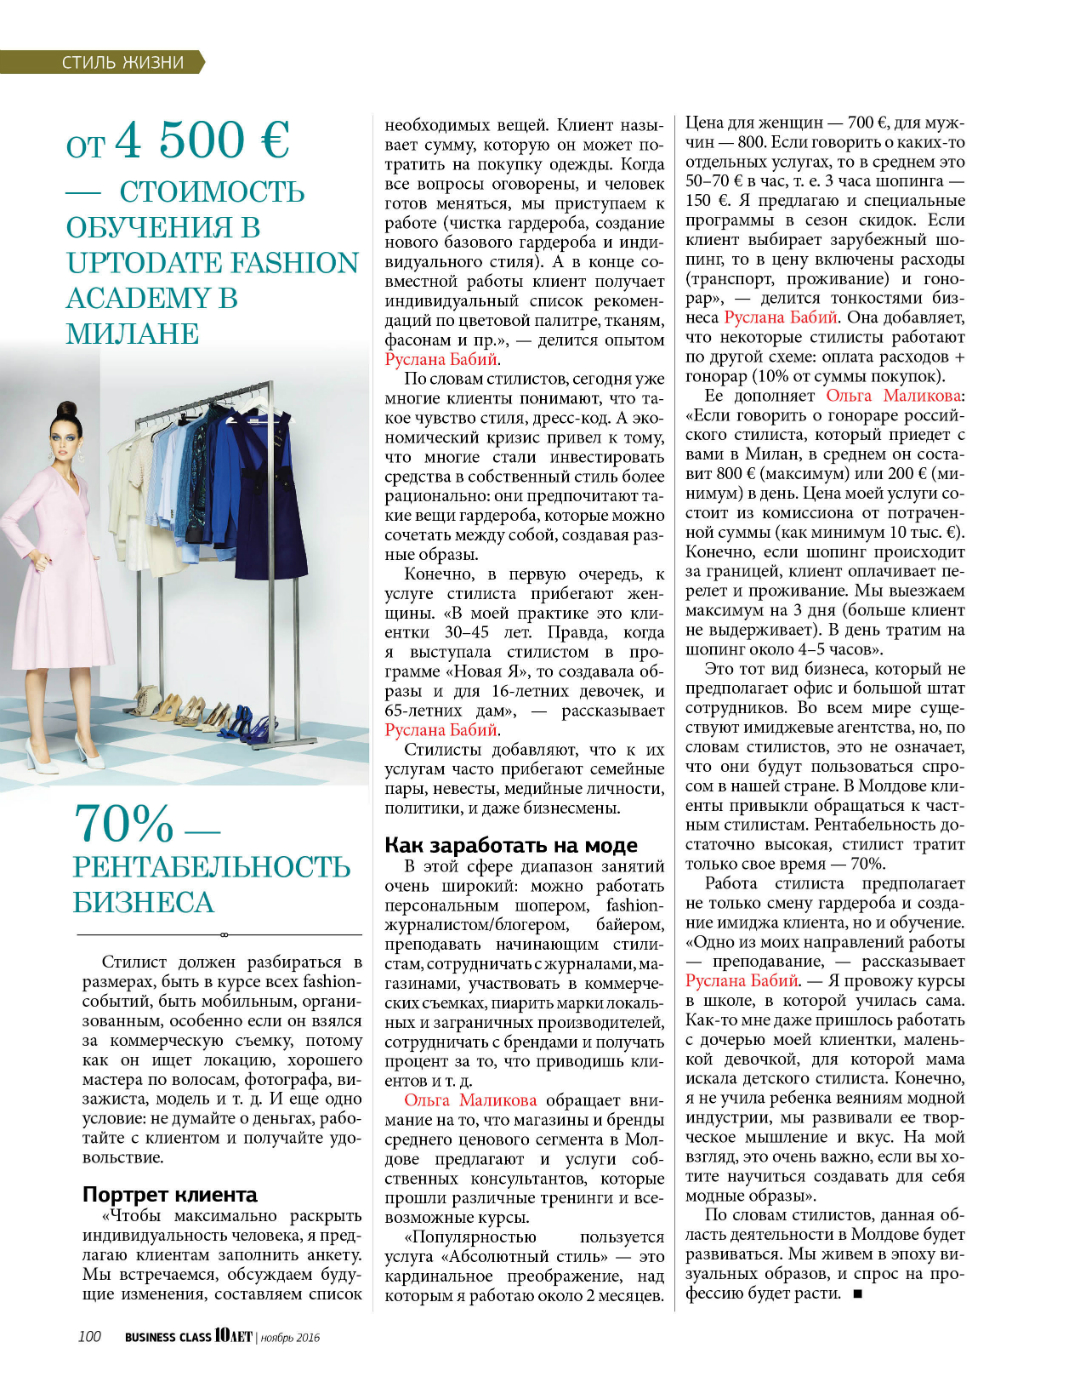 olga-malicova-business-class-magazine-3